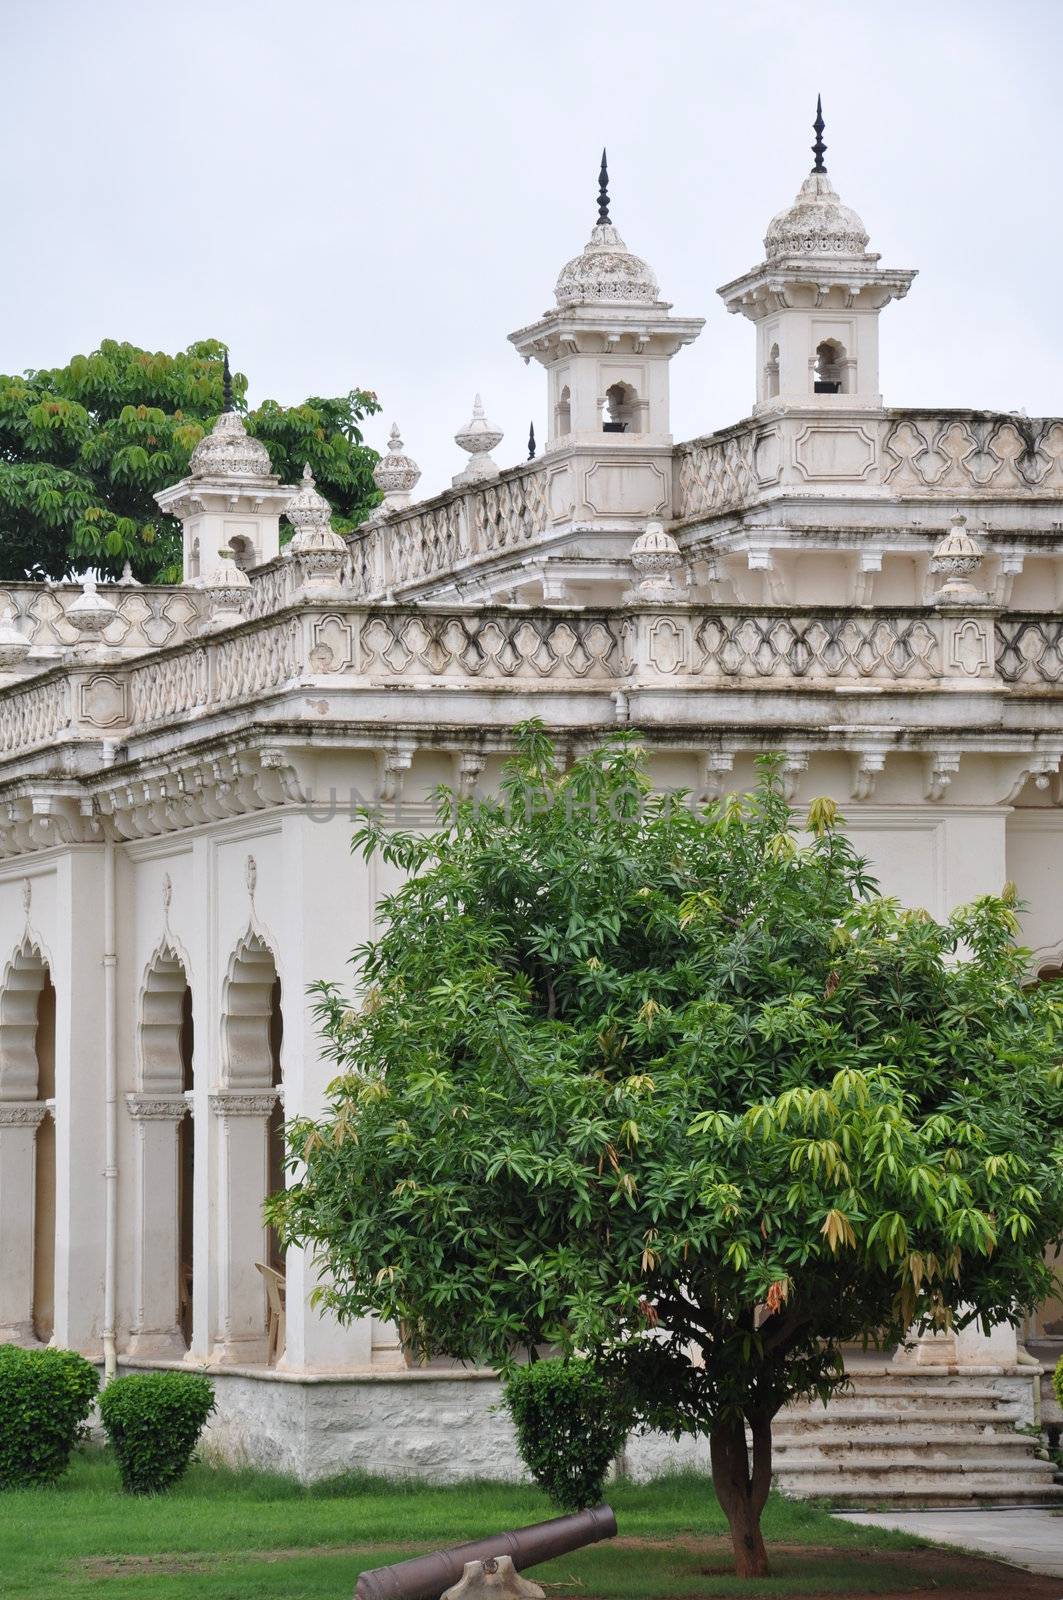 Chowmahalla Palace in Hyderabad, India by sainaniritu